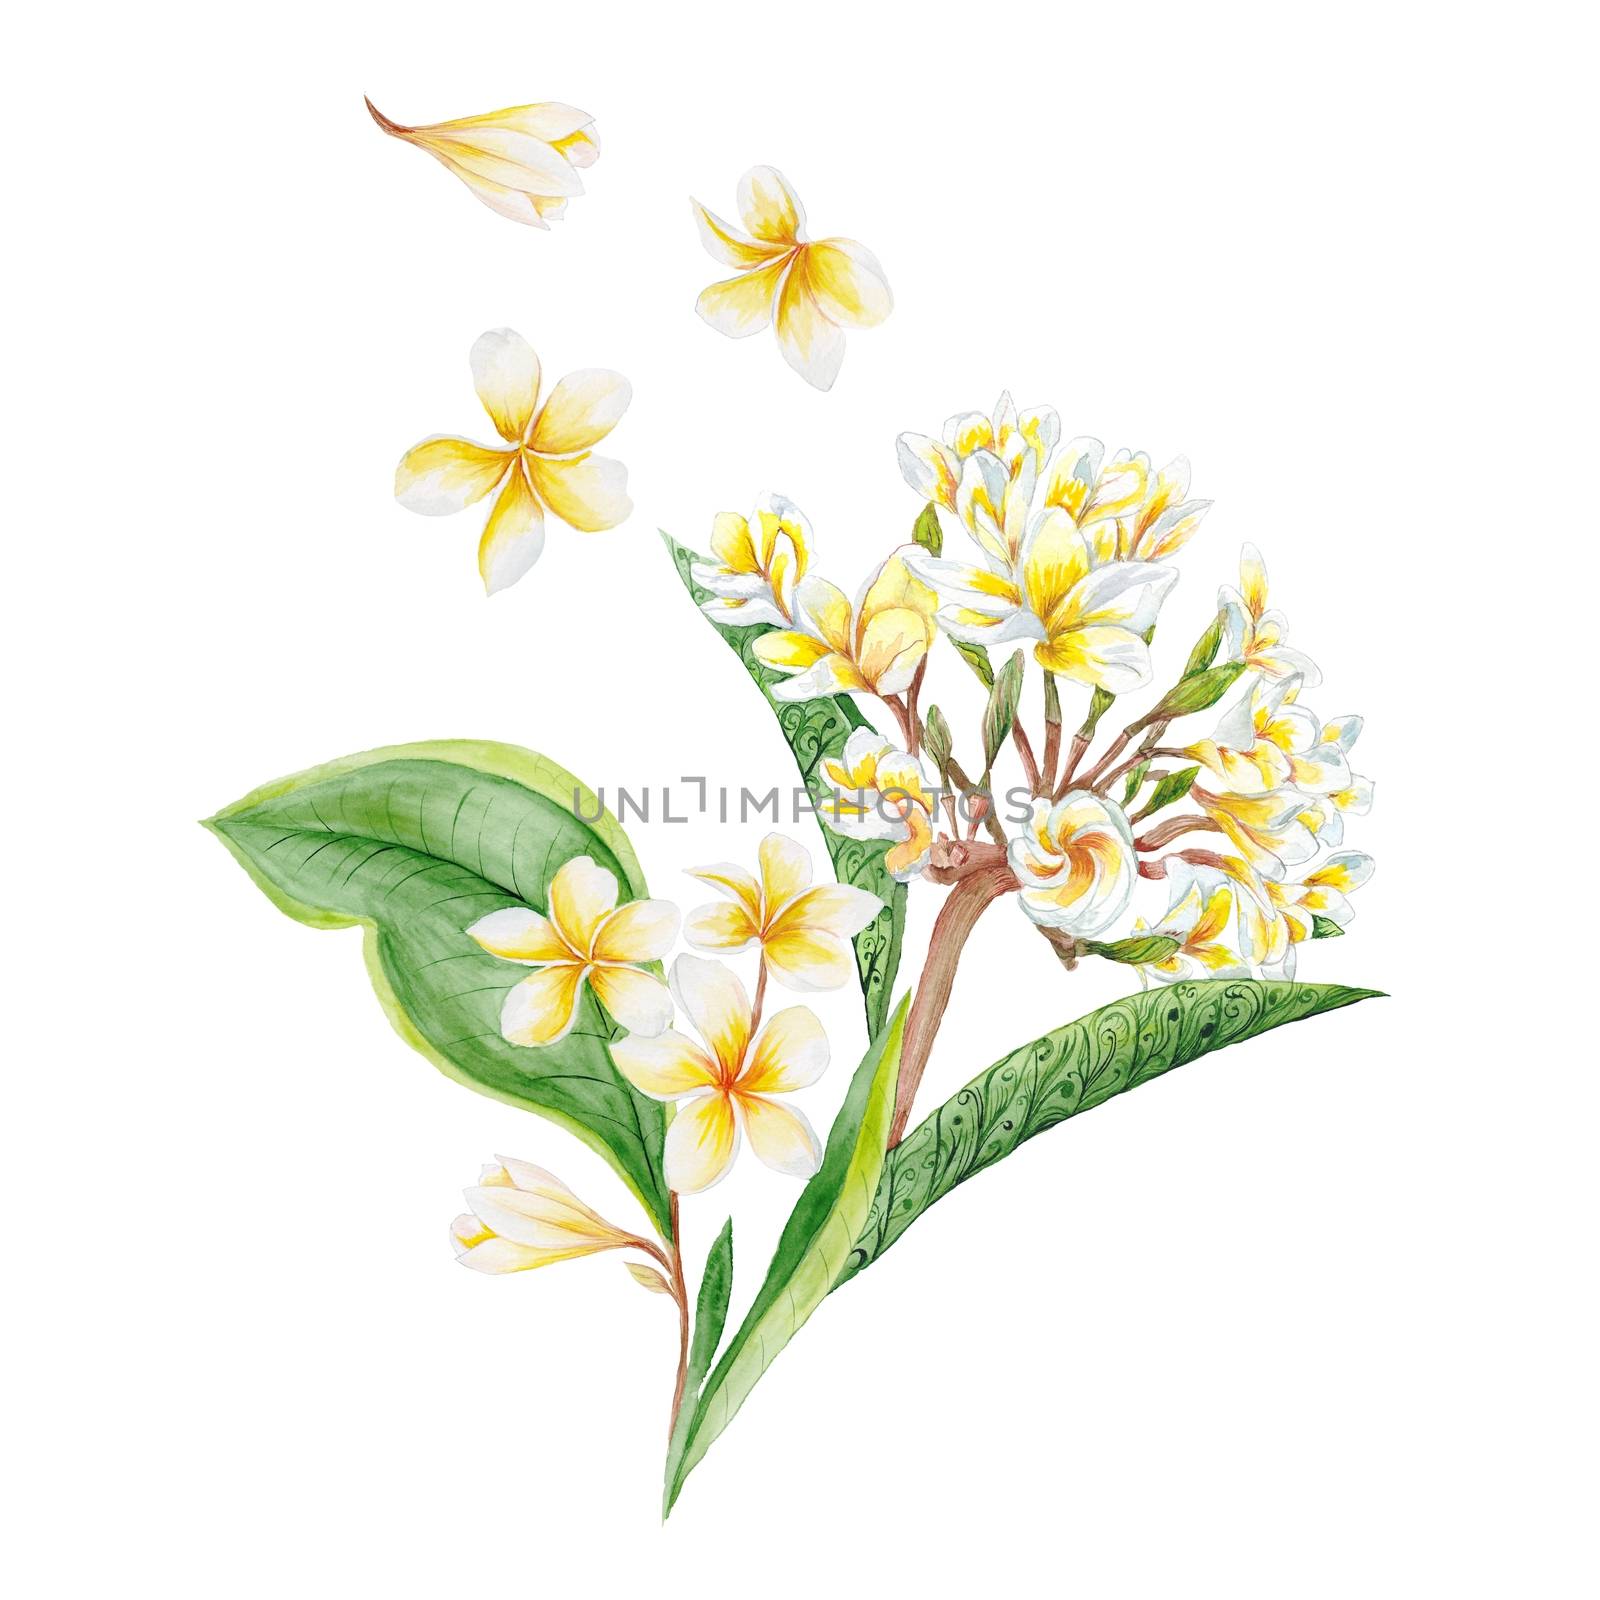 Floral Plumeria Vignette by kisika